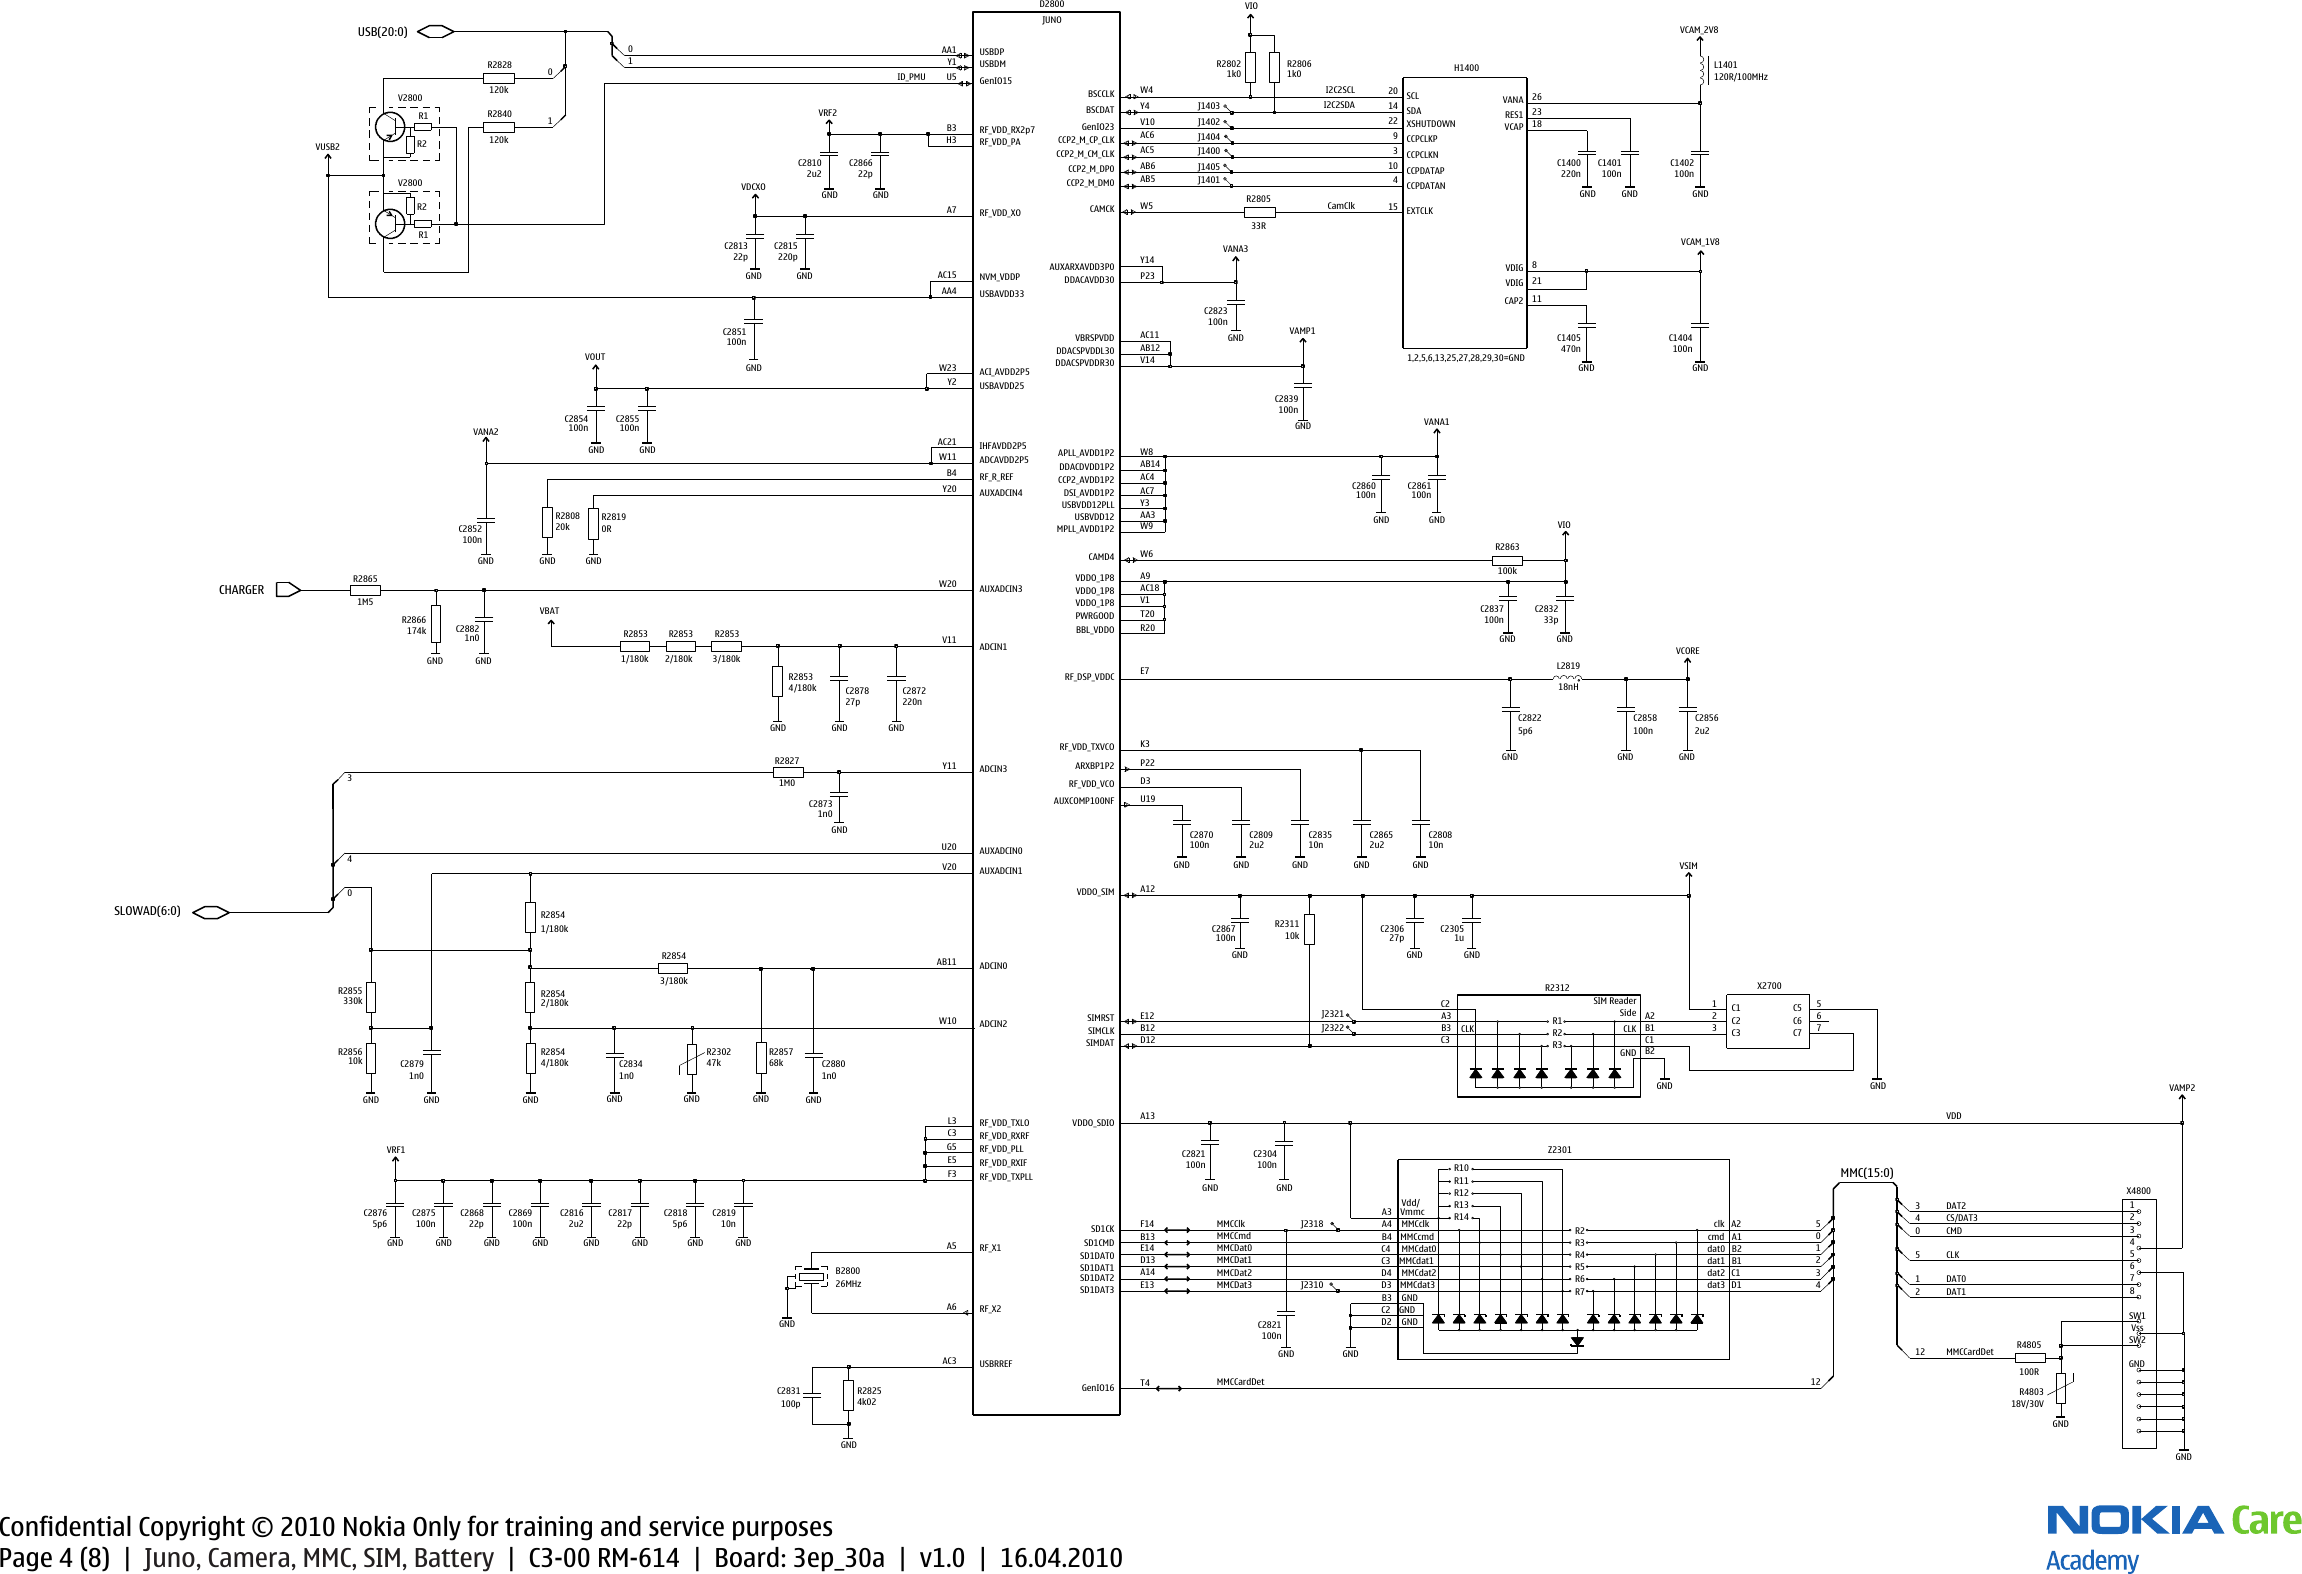 Page 4 of 8 - Nokia C3-00 RM-614 Service Schematics V1.0